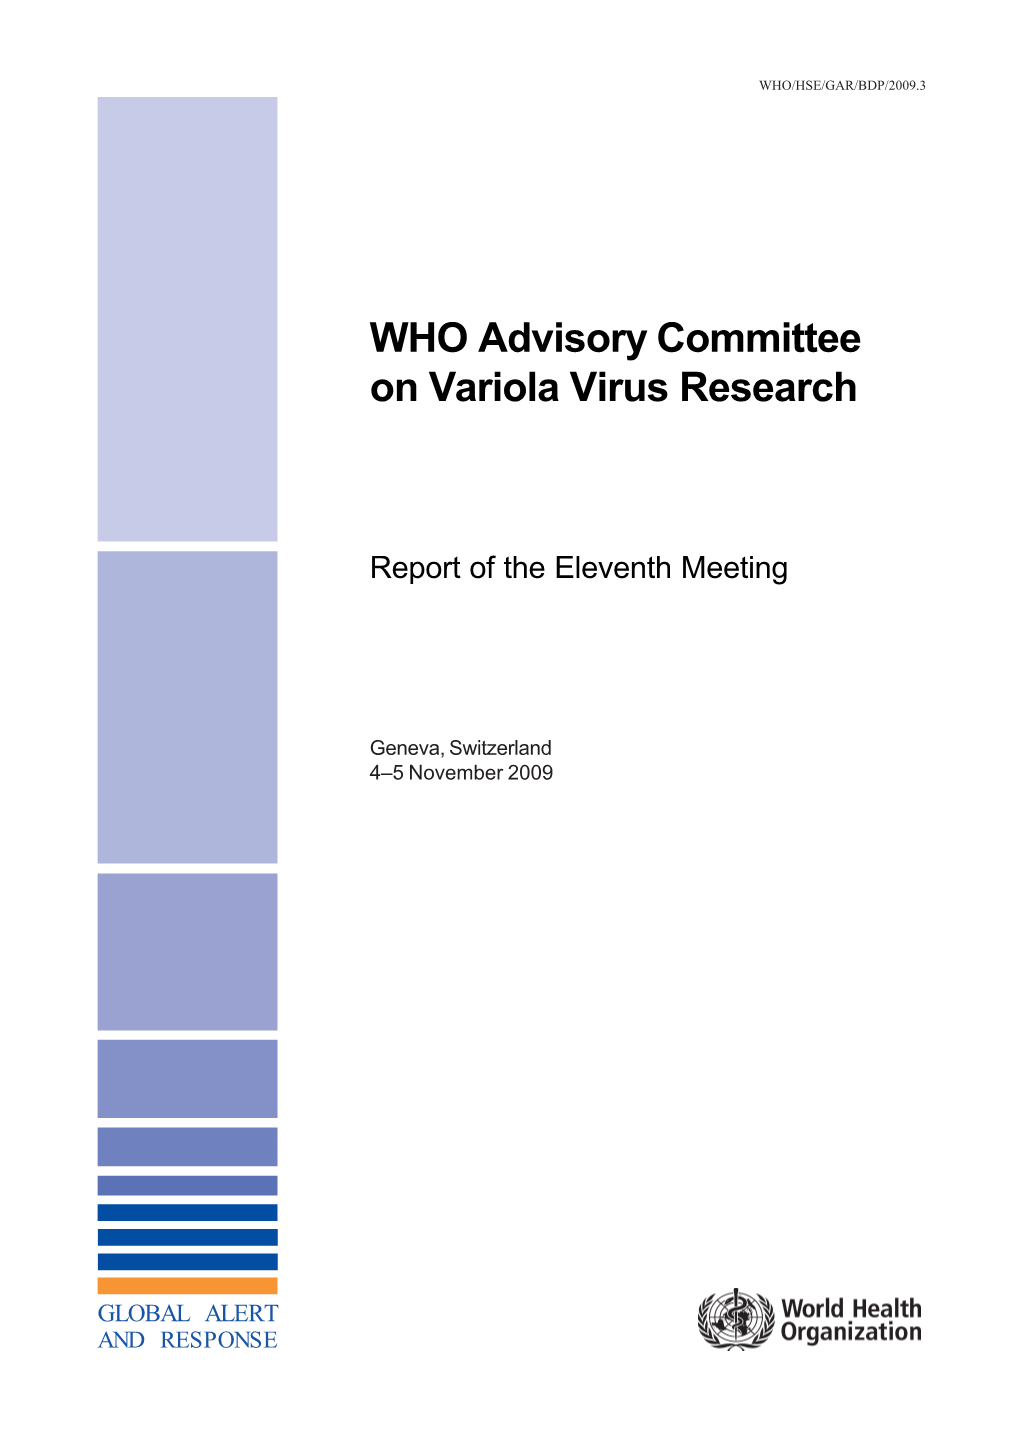 WHO Advisory Committee on Variola Virus Research